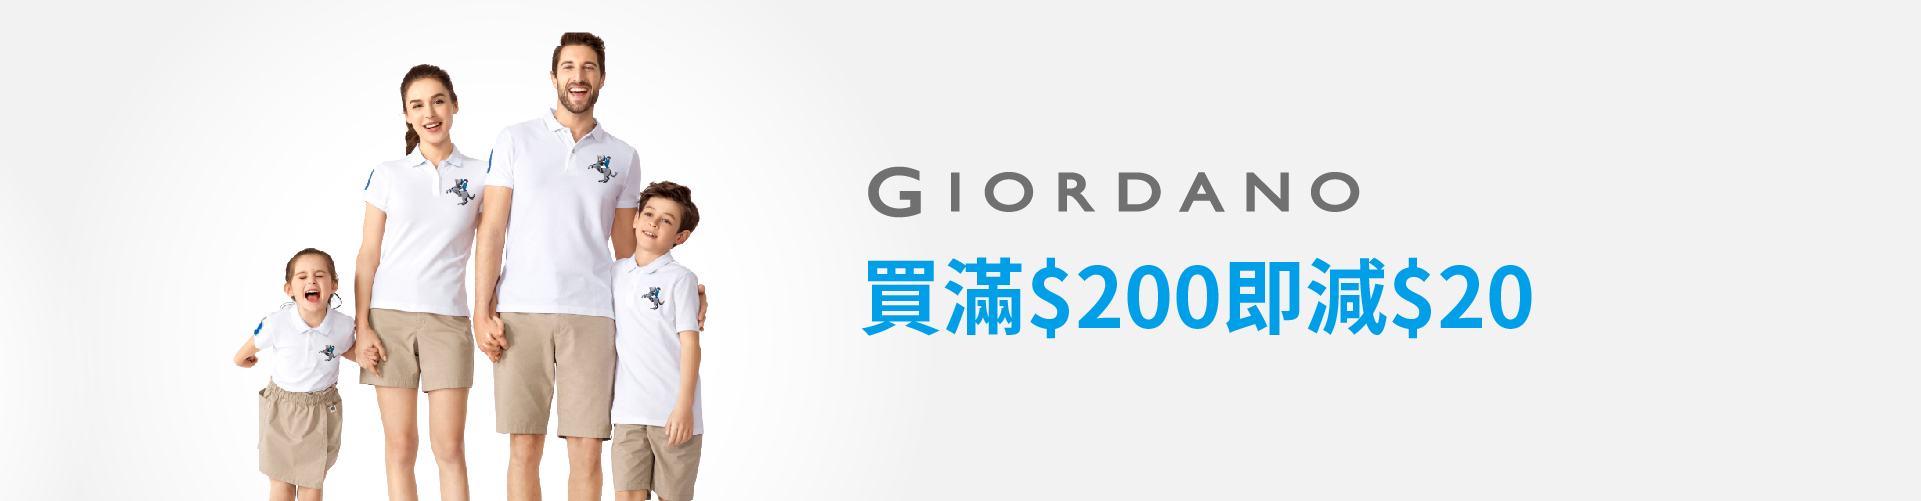 AlipayHK 支付寶 香港 於 Giordano 購物滿港幣200元 享港幣20元 優惠